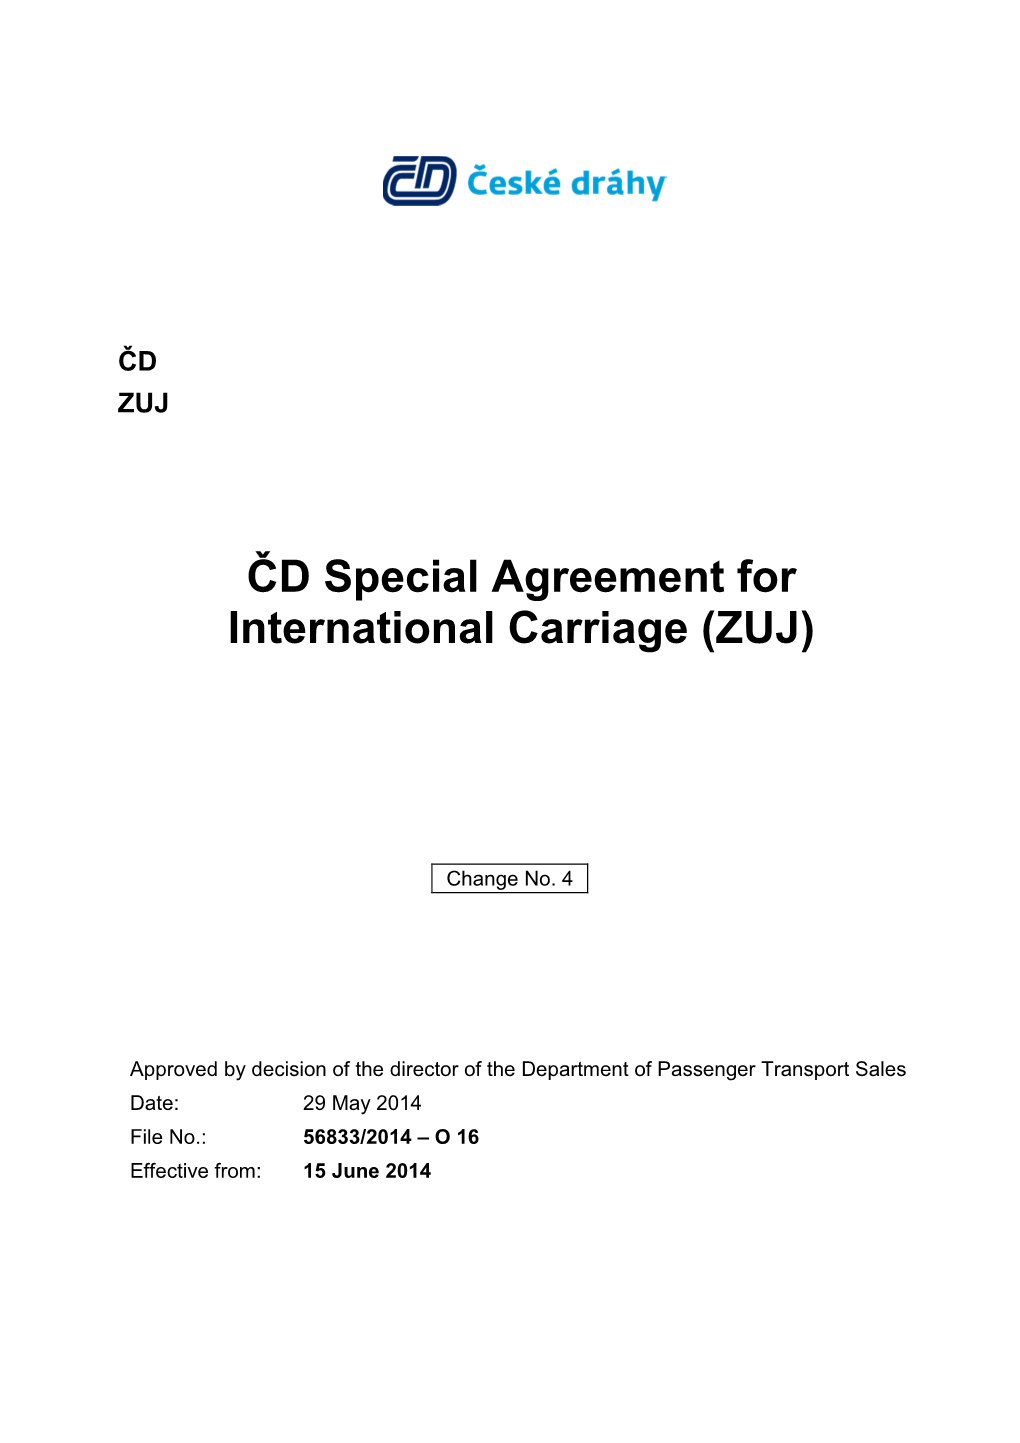 ČD Special Agreement for International Carriage (ZUJ)